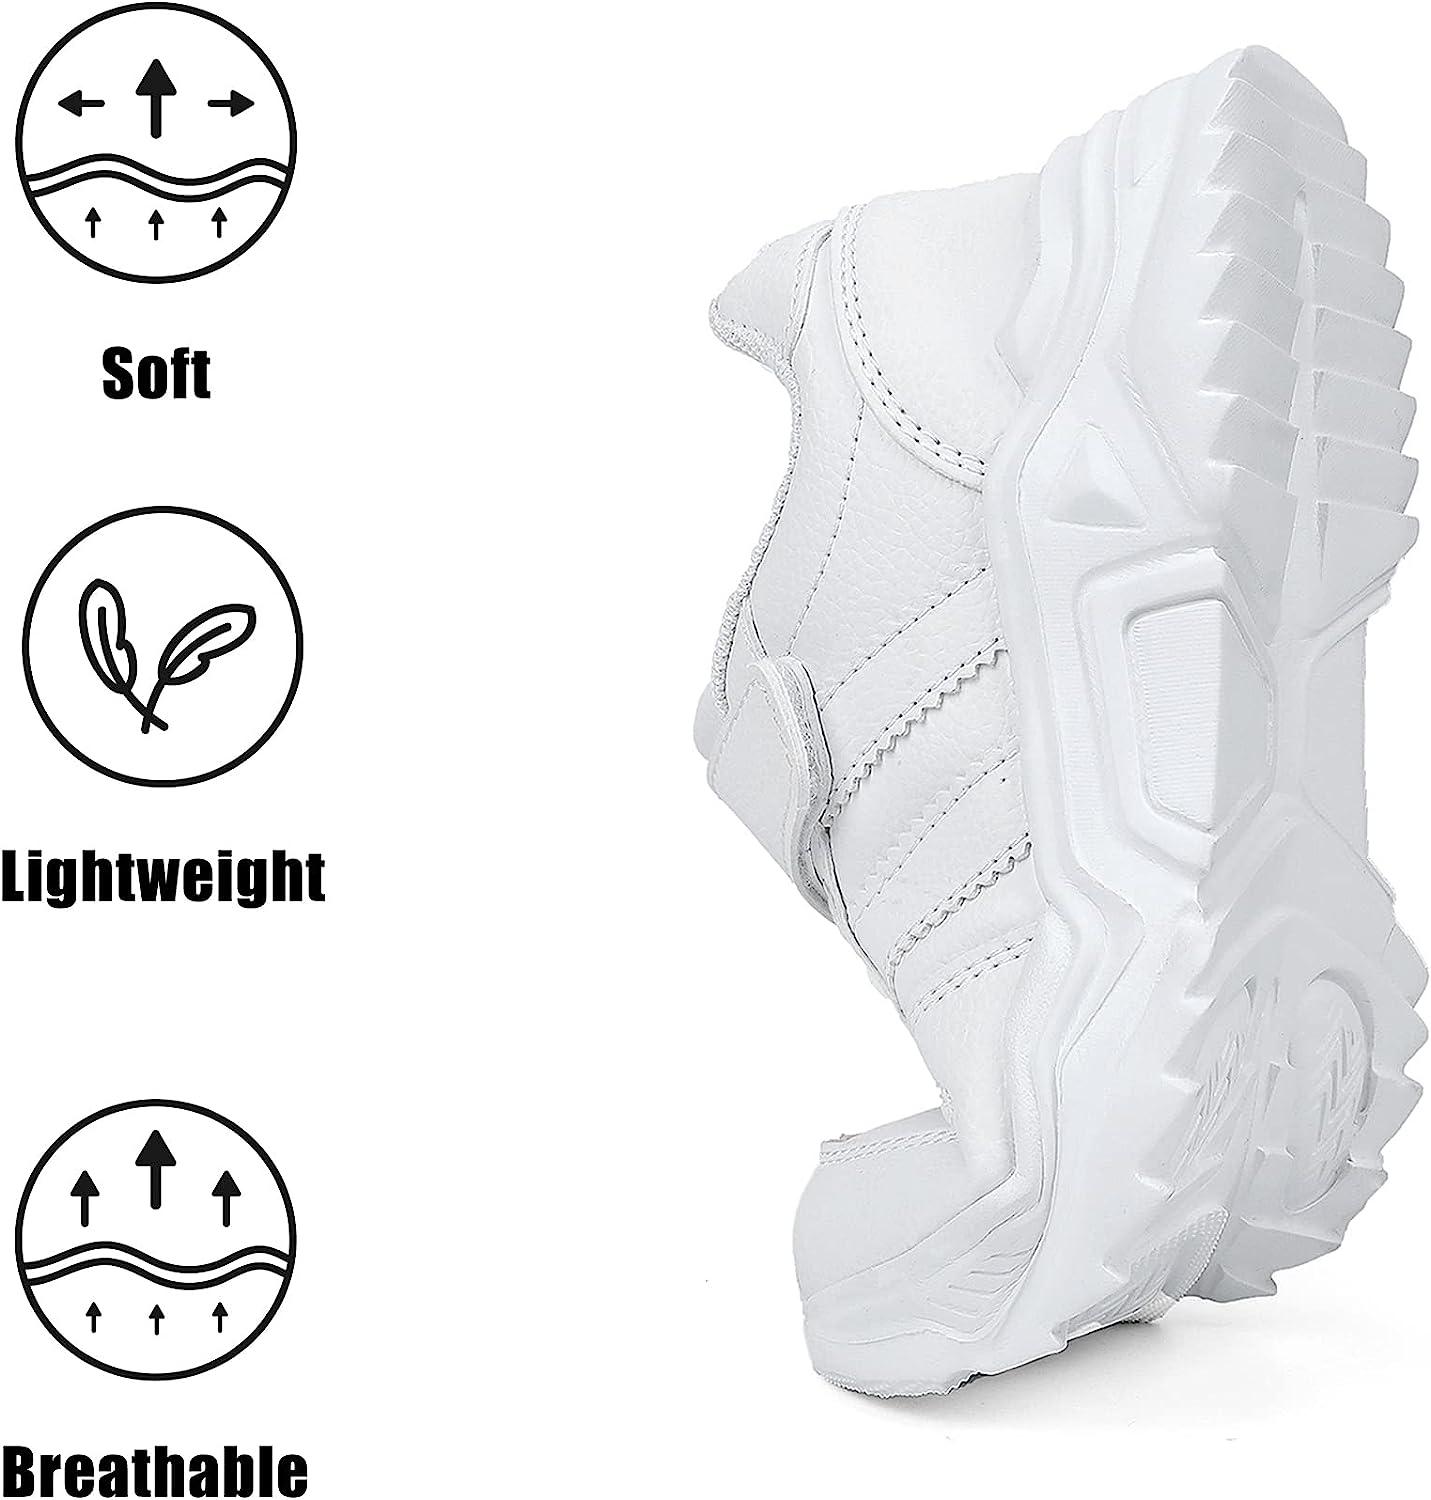 Buy North Star Women's Ella White Sneaker - 5 UK (5511933) at Amazon.in